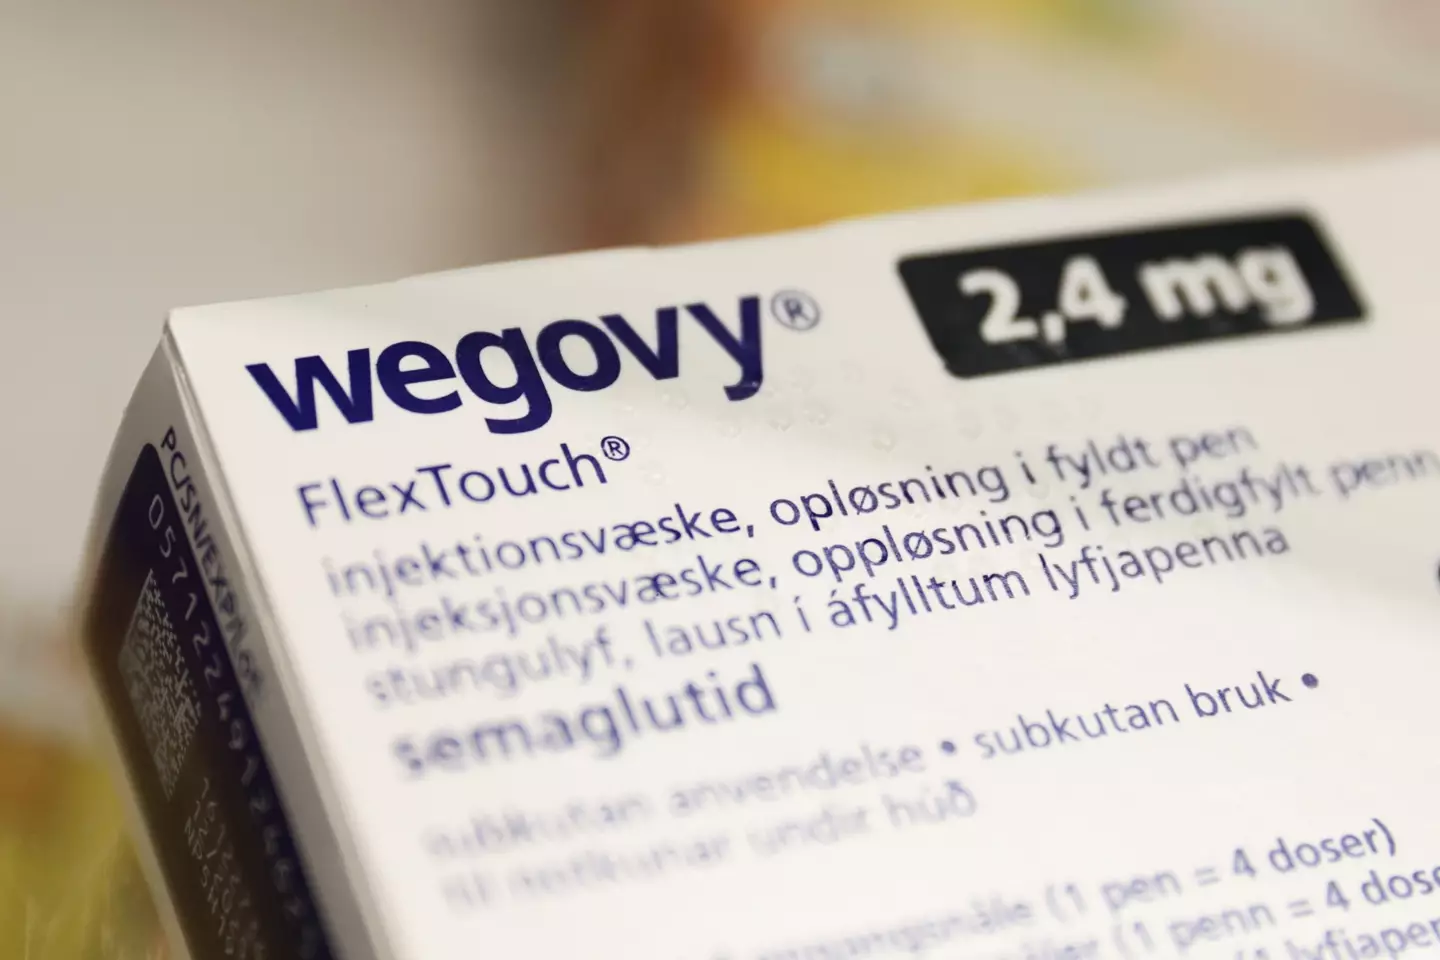 Wegovy is another brand of medication used in the same way as Ozempic. (Jakub Porzycki/NurPhoto via Getty Images)